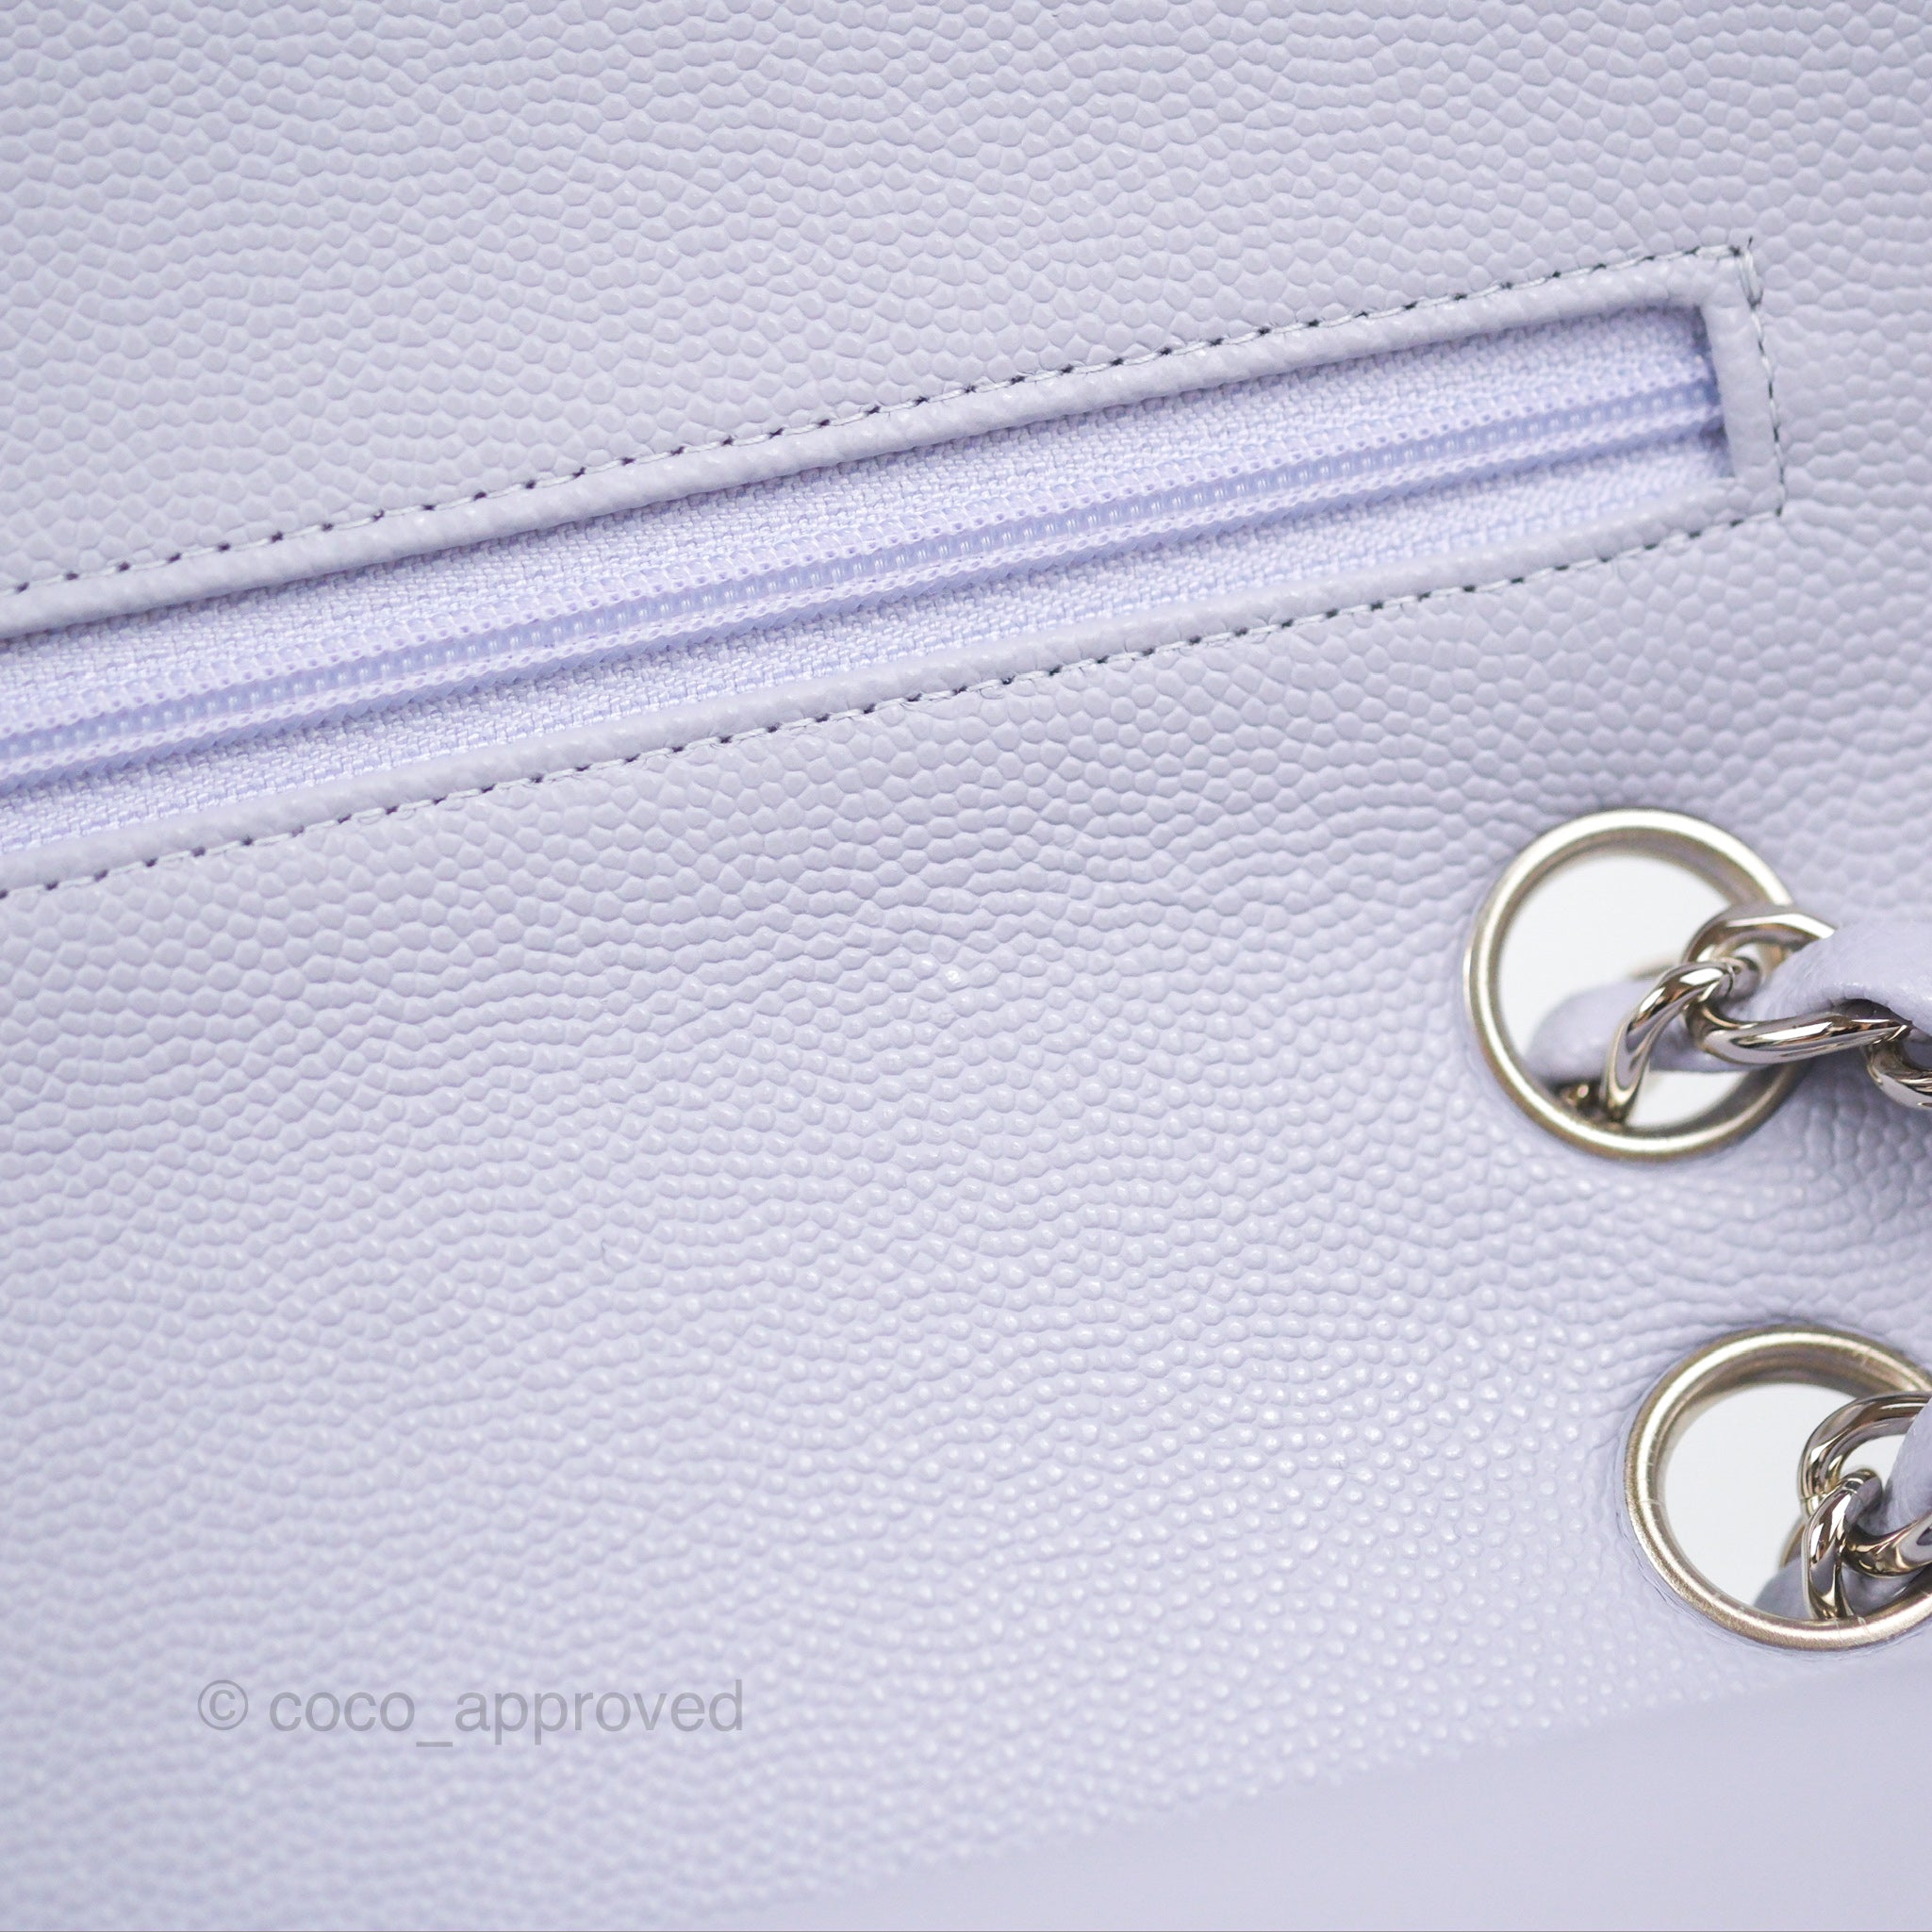 Chanel Classic M/L Medium Double Flap Bag Pink Caviar Silver